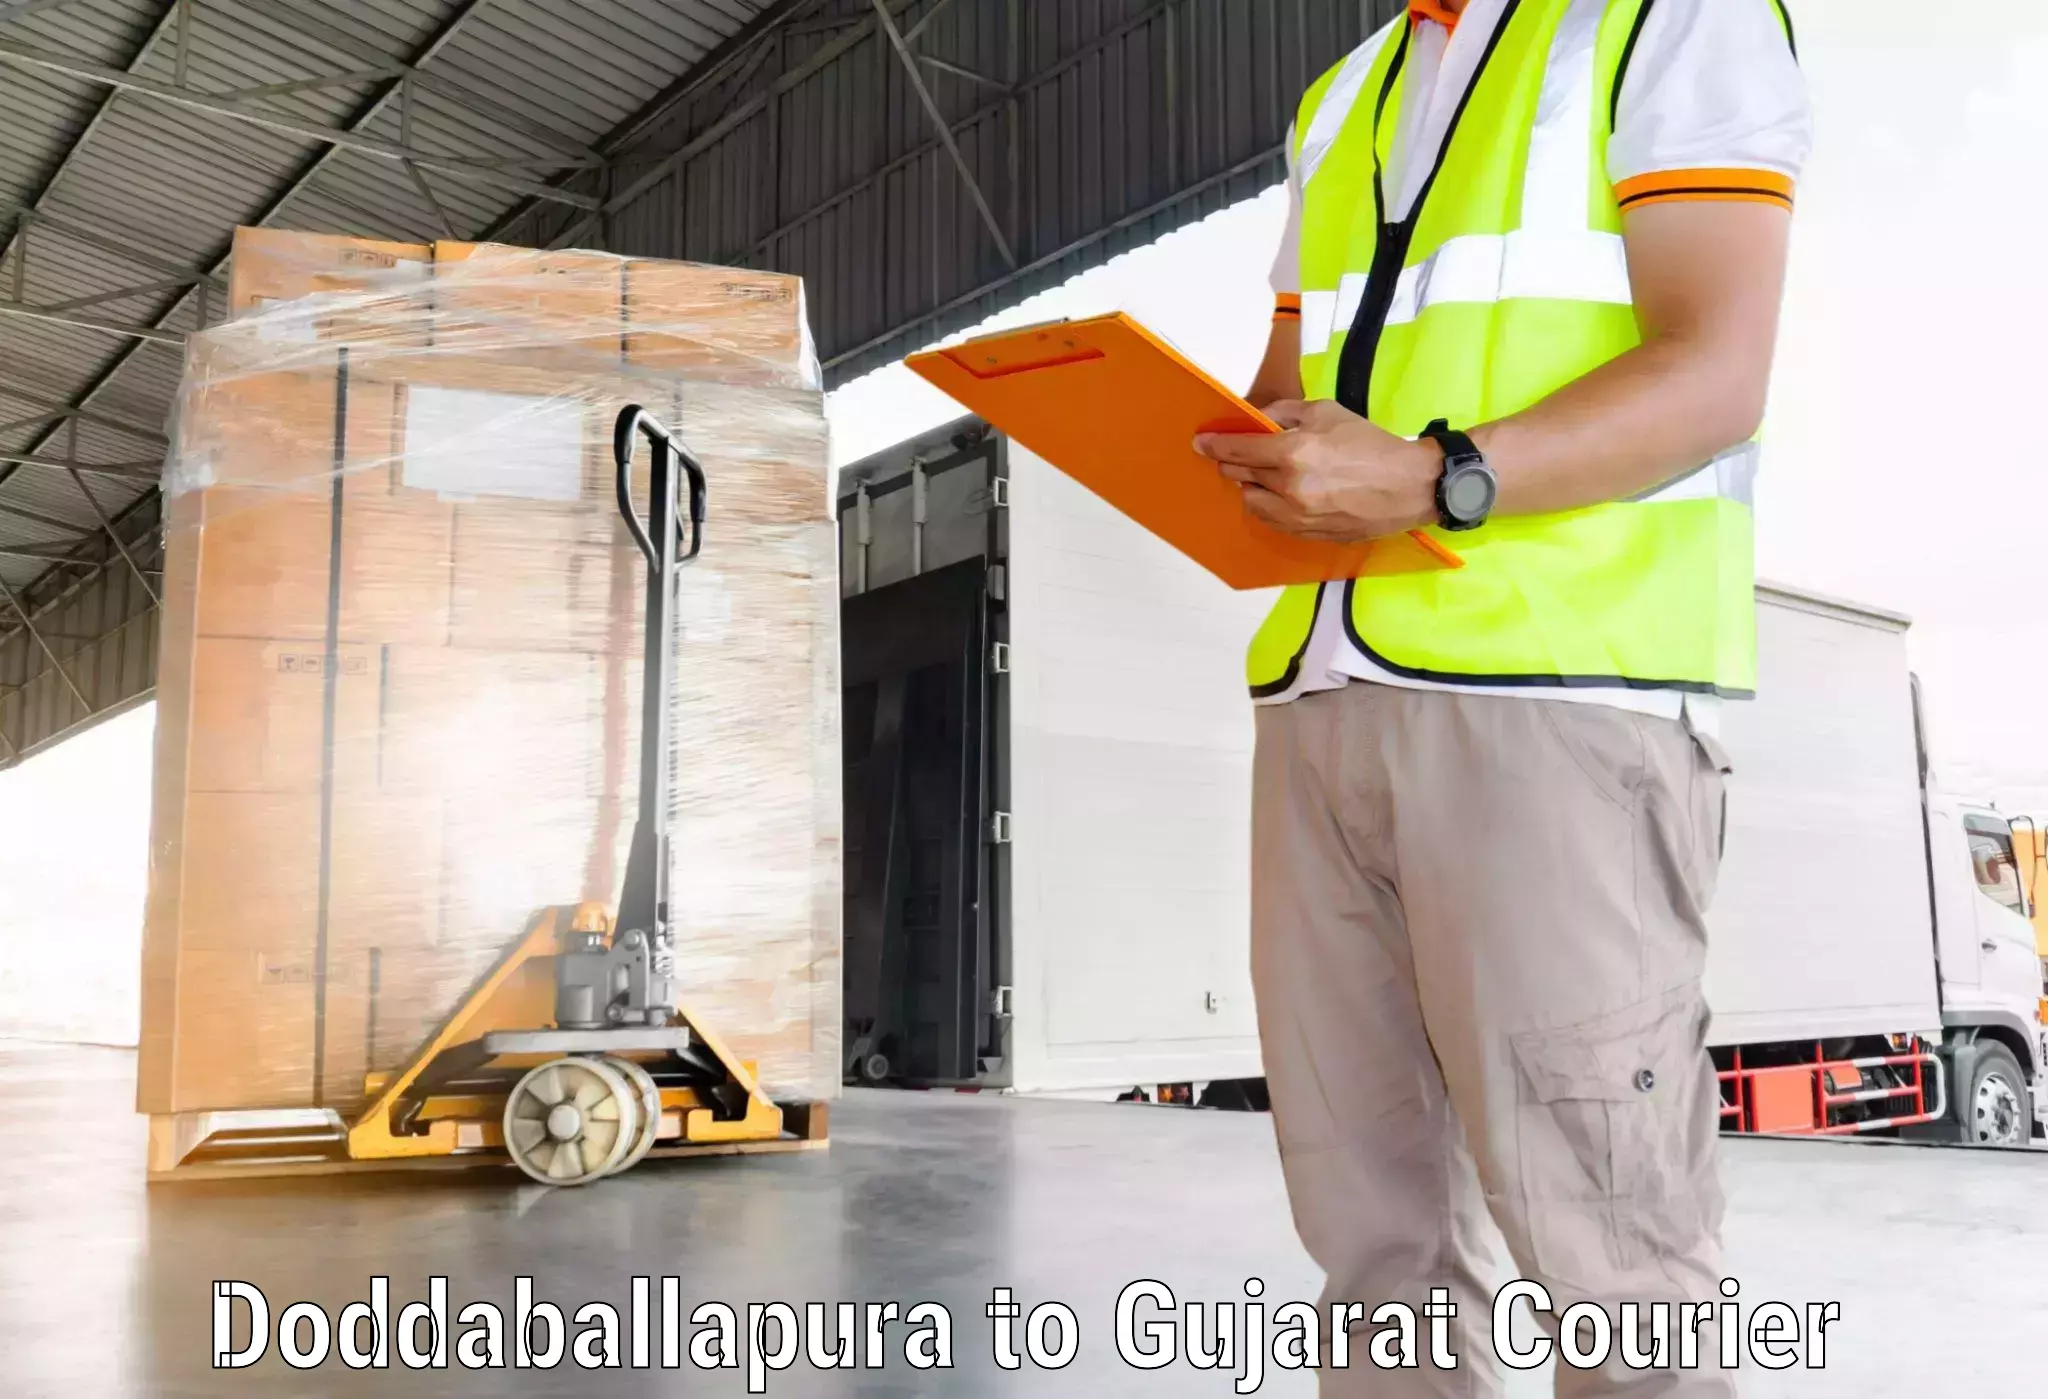 24/7 courier service Doddaballapura to Anand